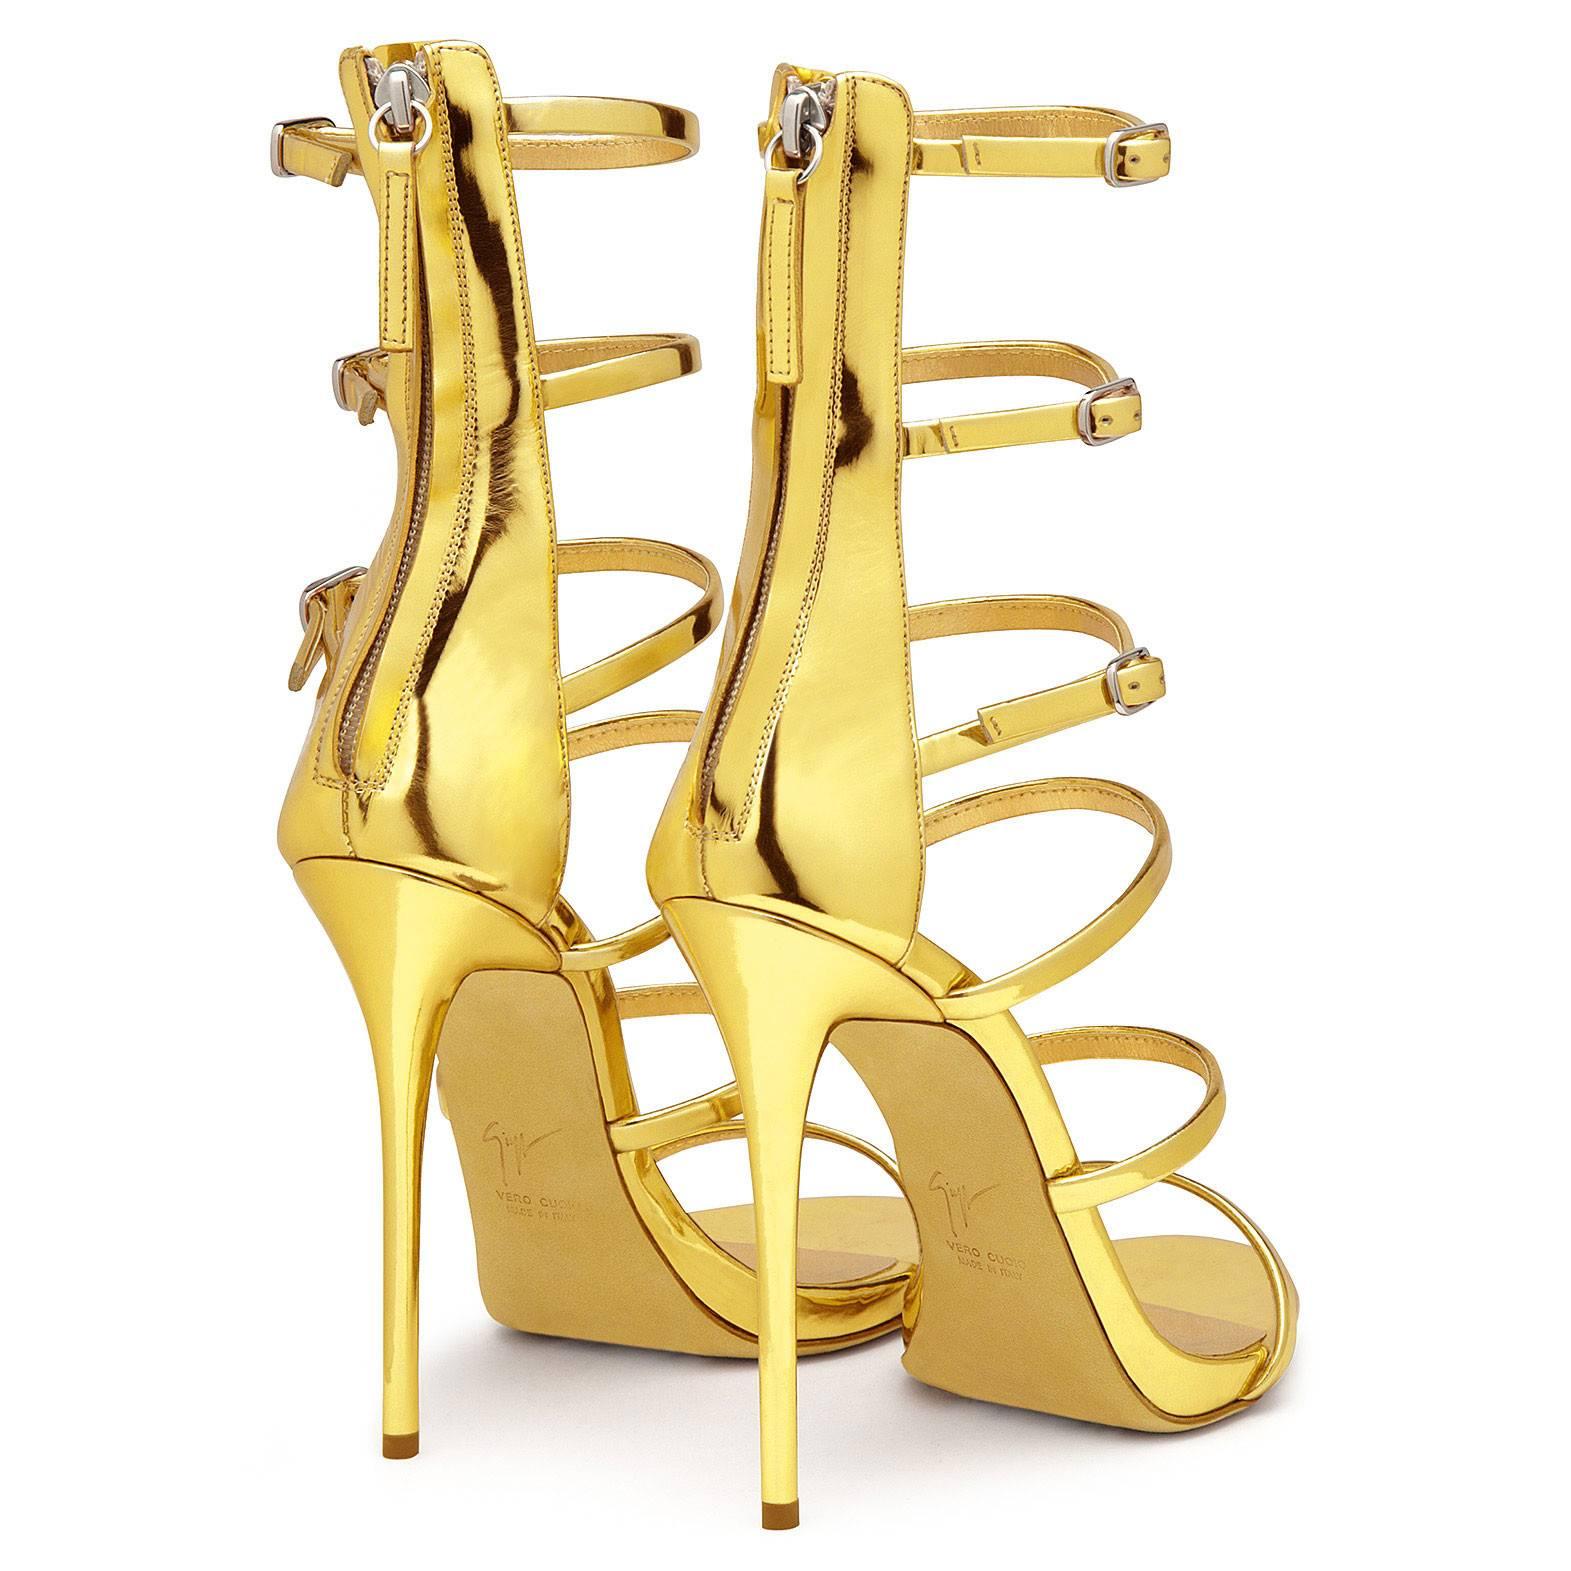 Giuseppe Zanotti NEW Gold Patent Evening Low Gladiator Sandals Heels in Box 1